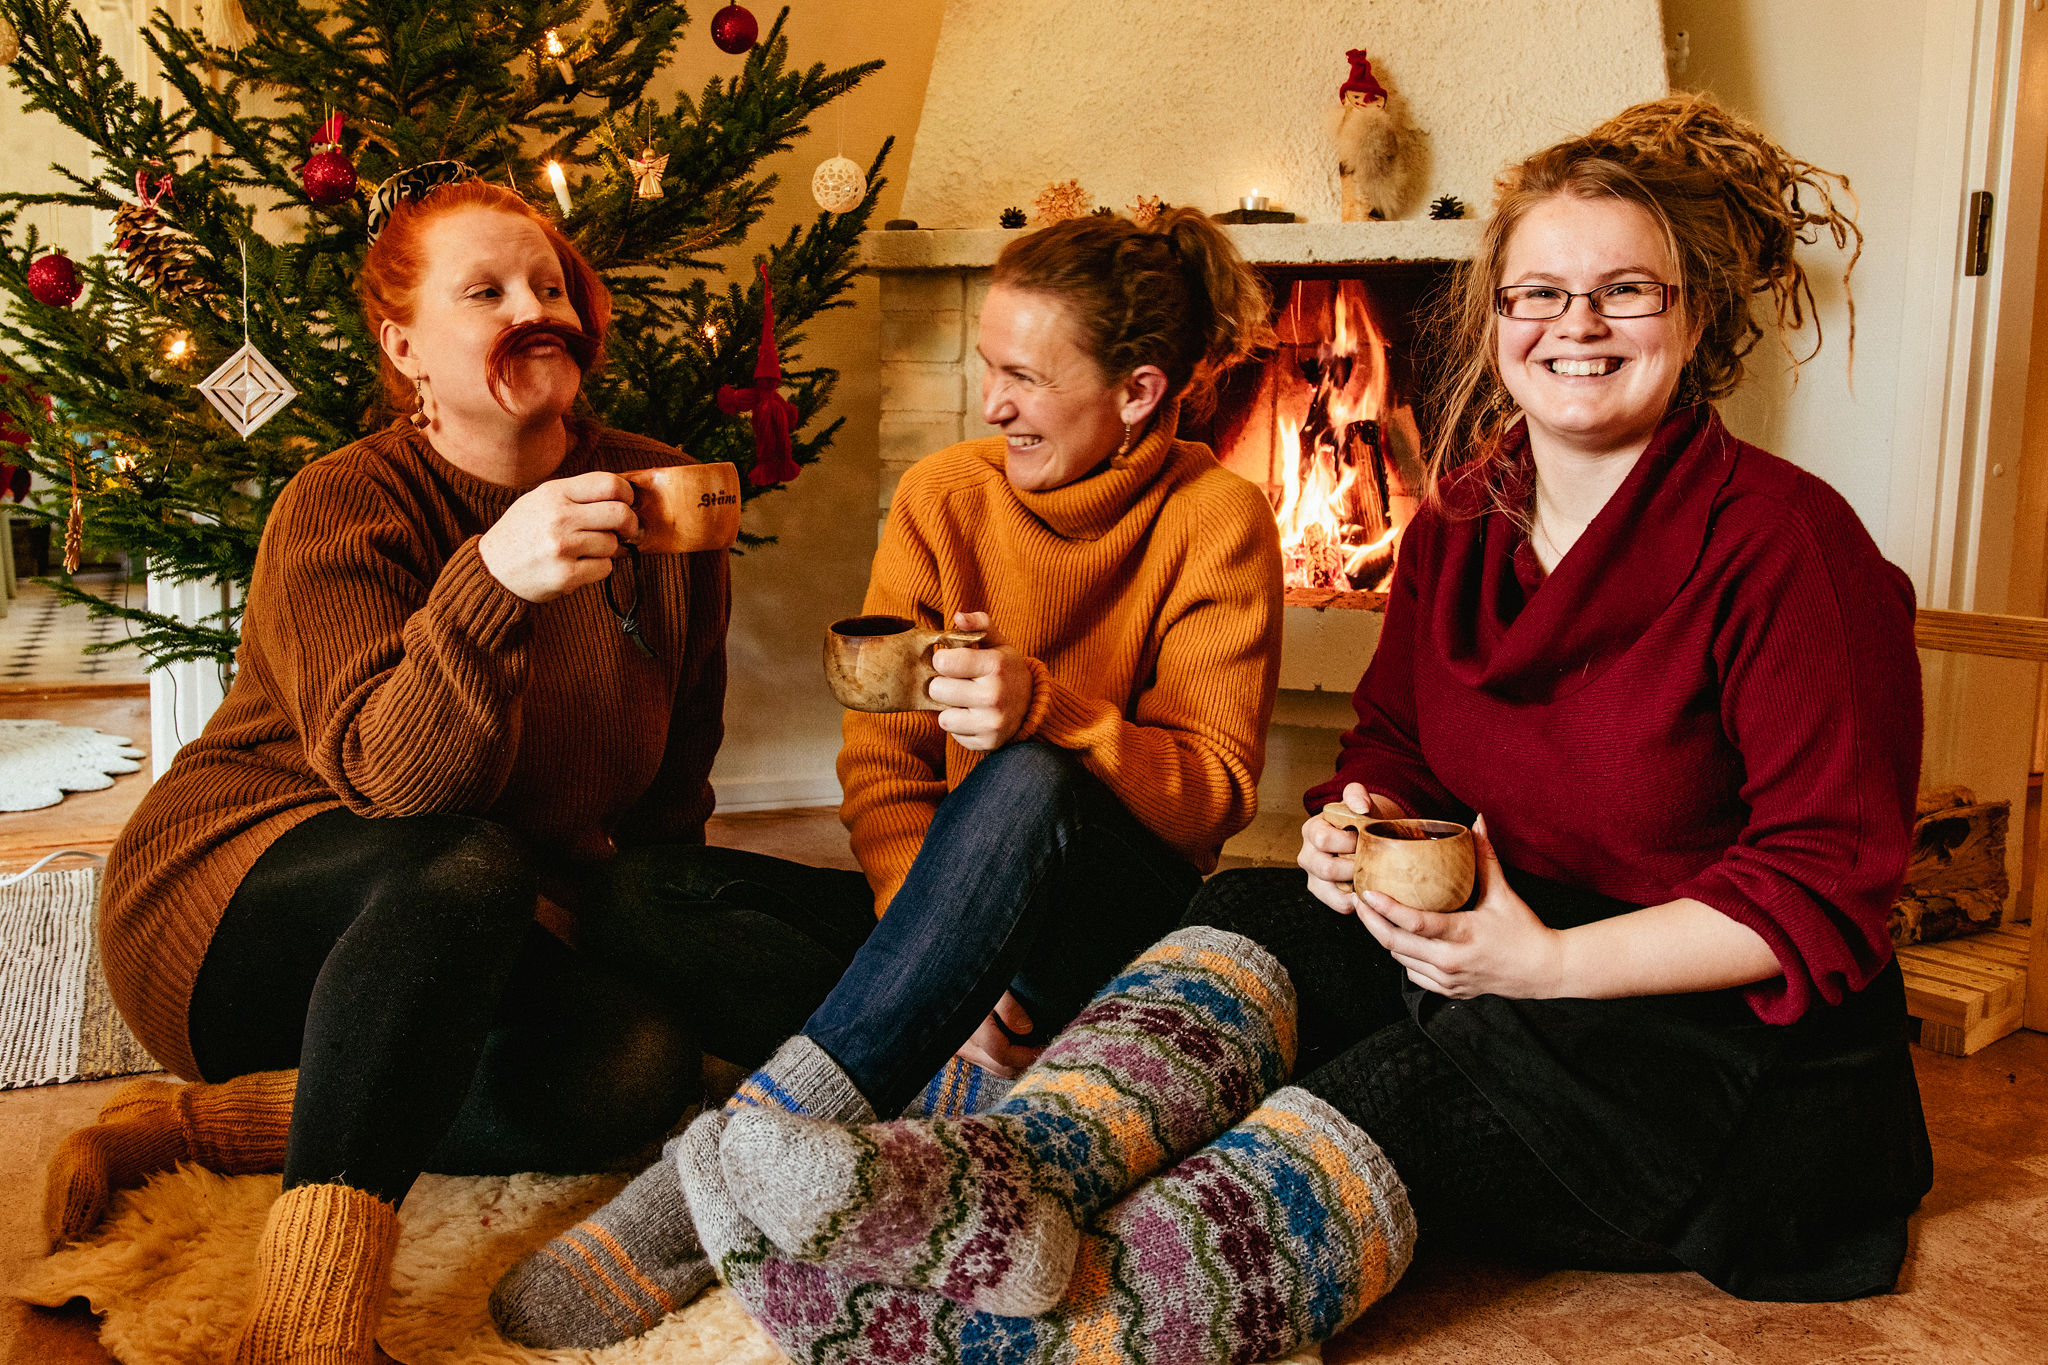 saimaaLife ladies Stiina, Mari and Marianne in Finland enjoying Christmas drinks by the fireplace